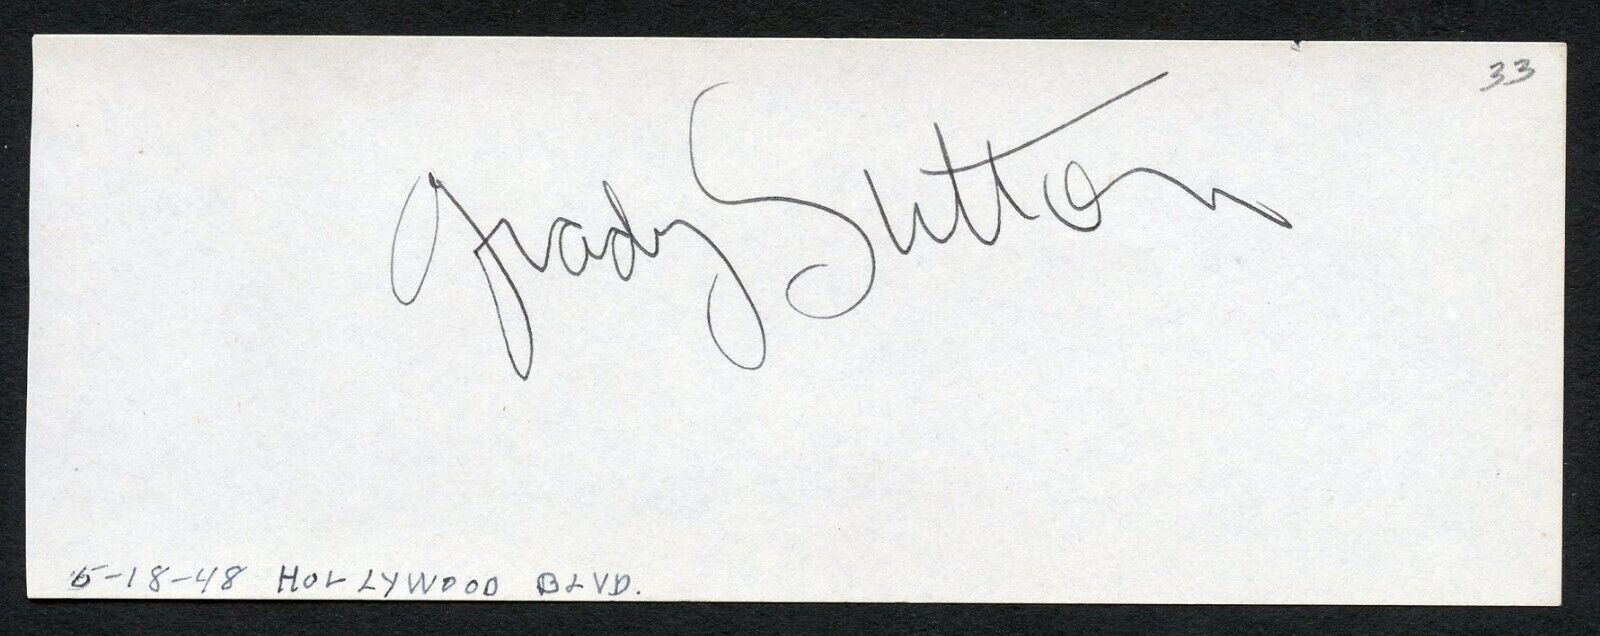 Grady Sutton d1995 signed 2x5 cut autograph on 5-18-48 at Hollywood Boulevard LA